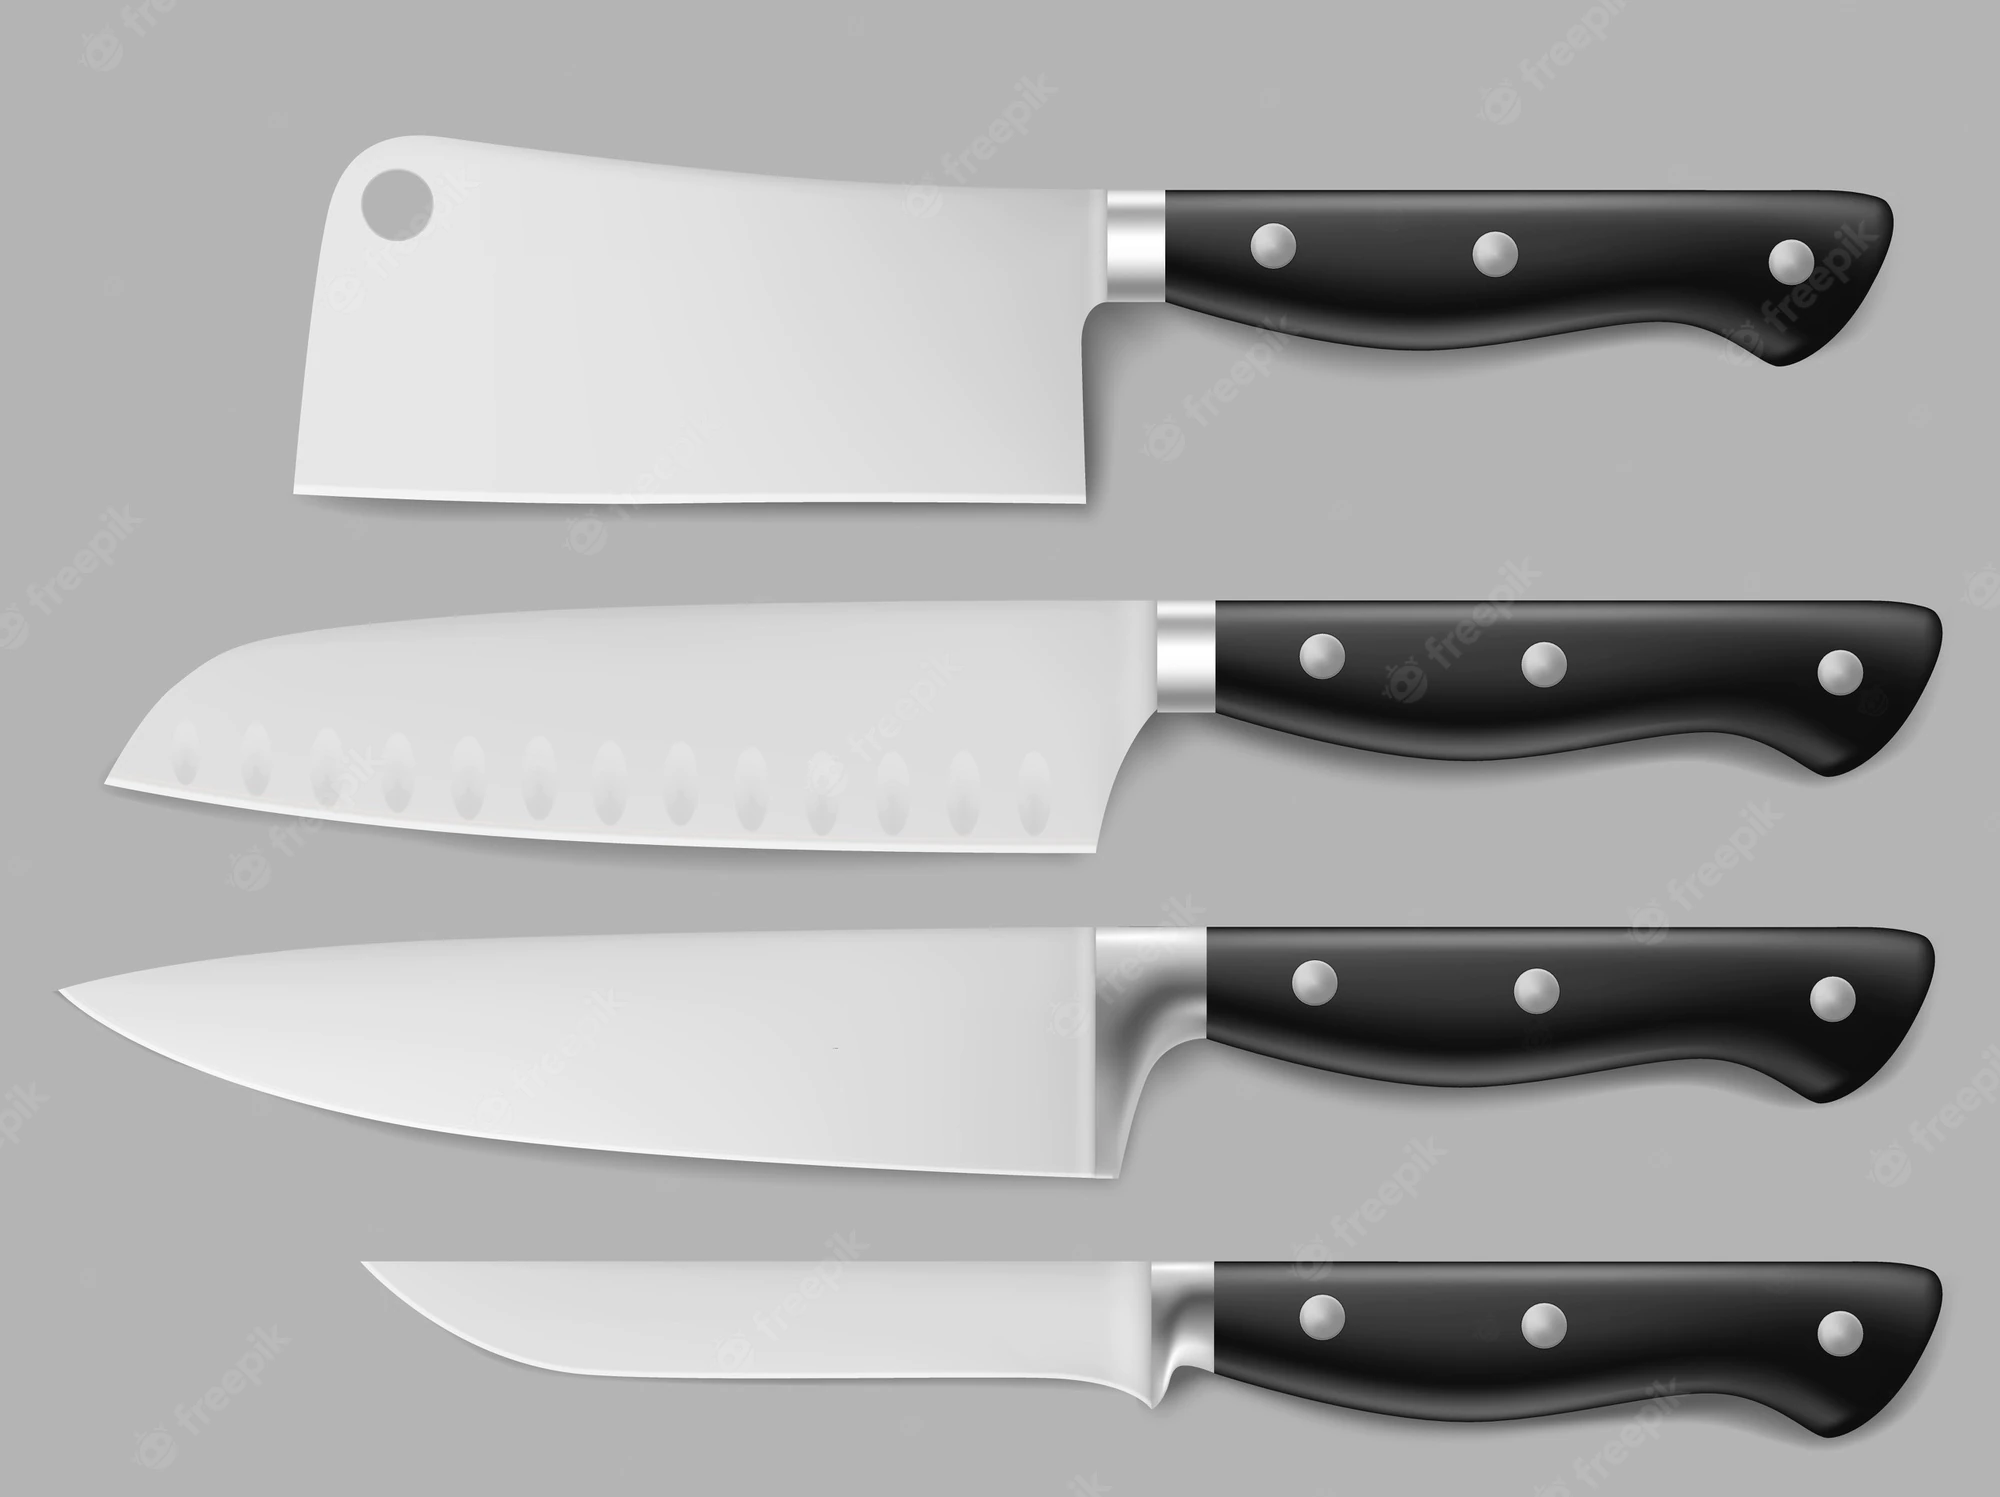 northmen knives review